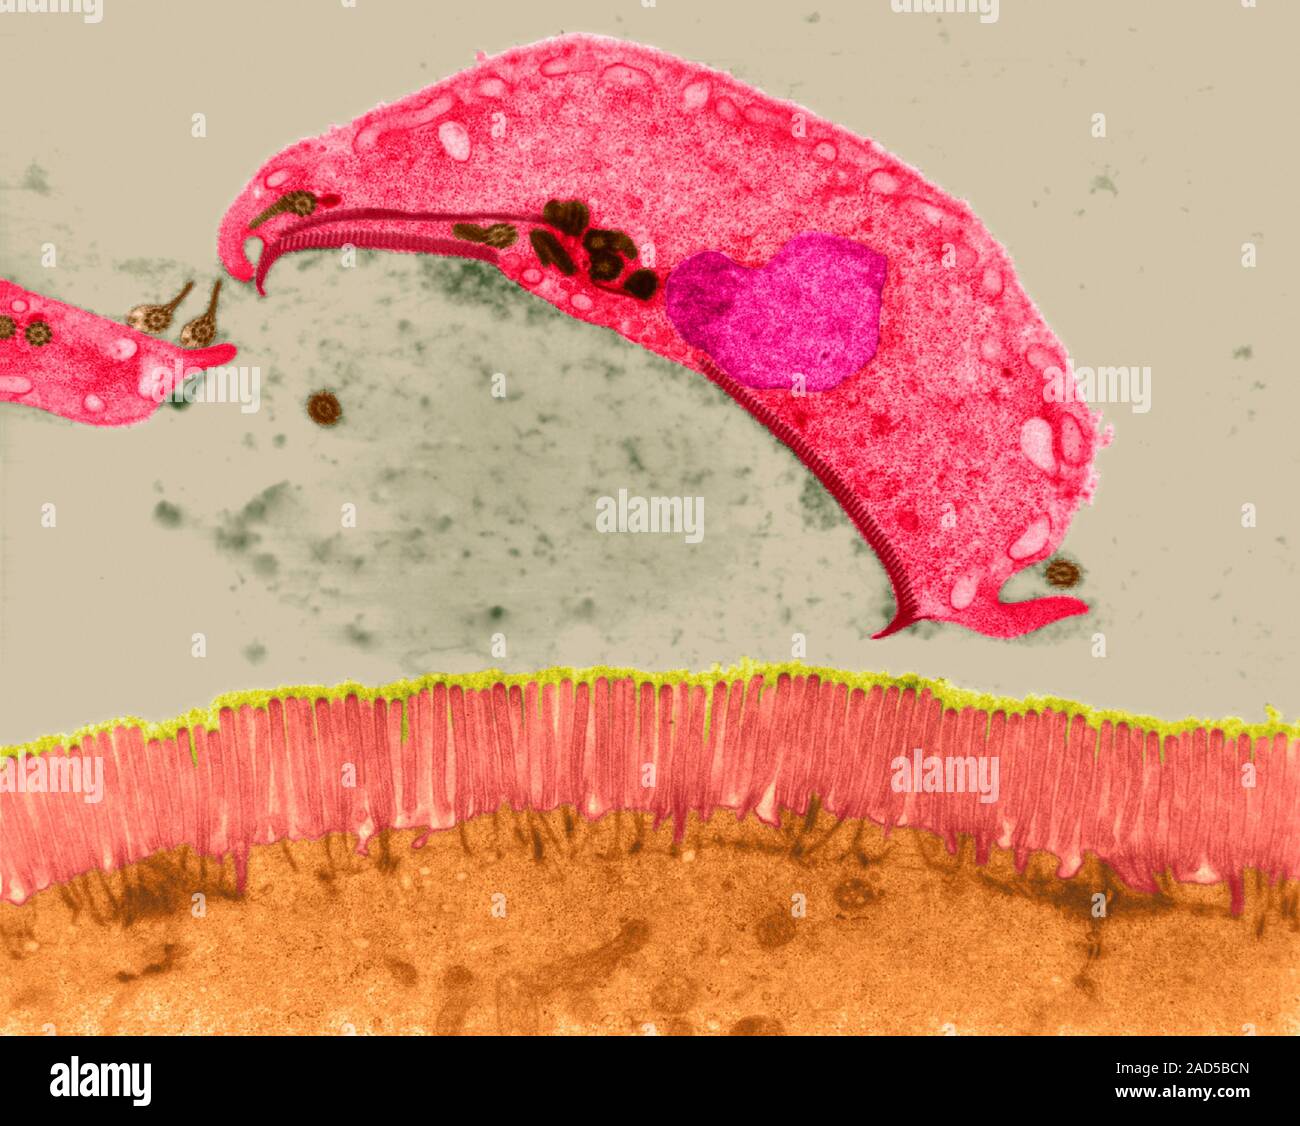 Infezione da protozoi (giardiasi) umani nel lume intestinale (Giardia sp.),  colorata micrografia elettronica a trasmissione (TEM). Giardia lamblia, un  uomo pa Foto stock - Alamy